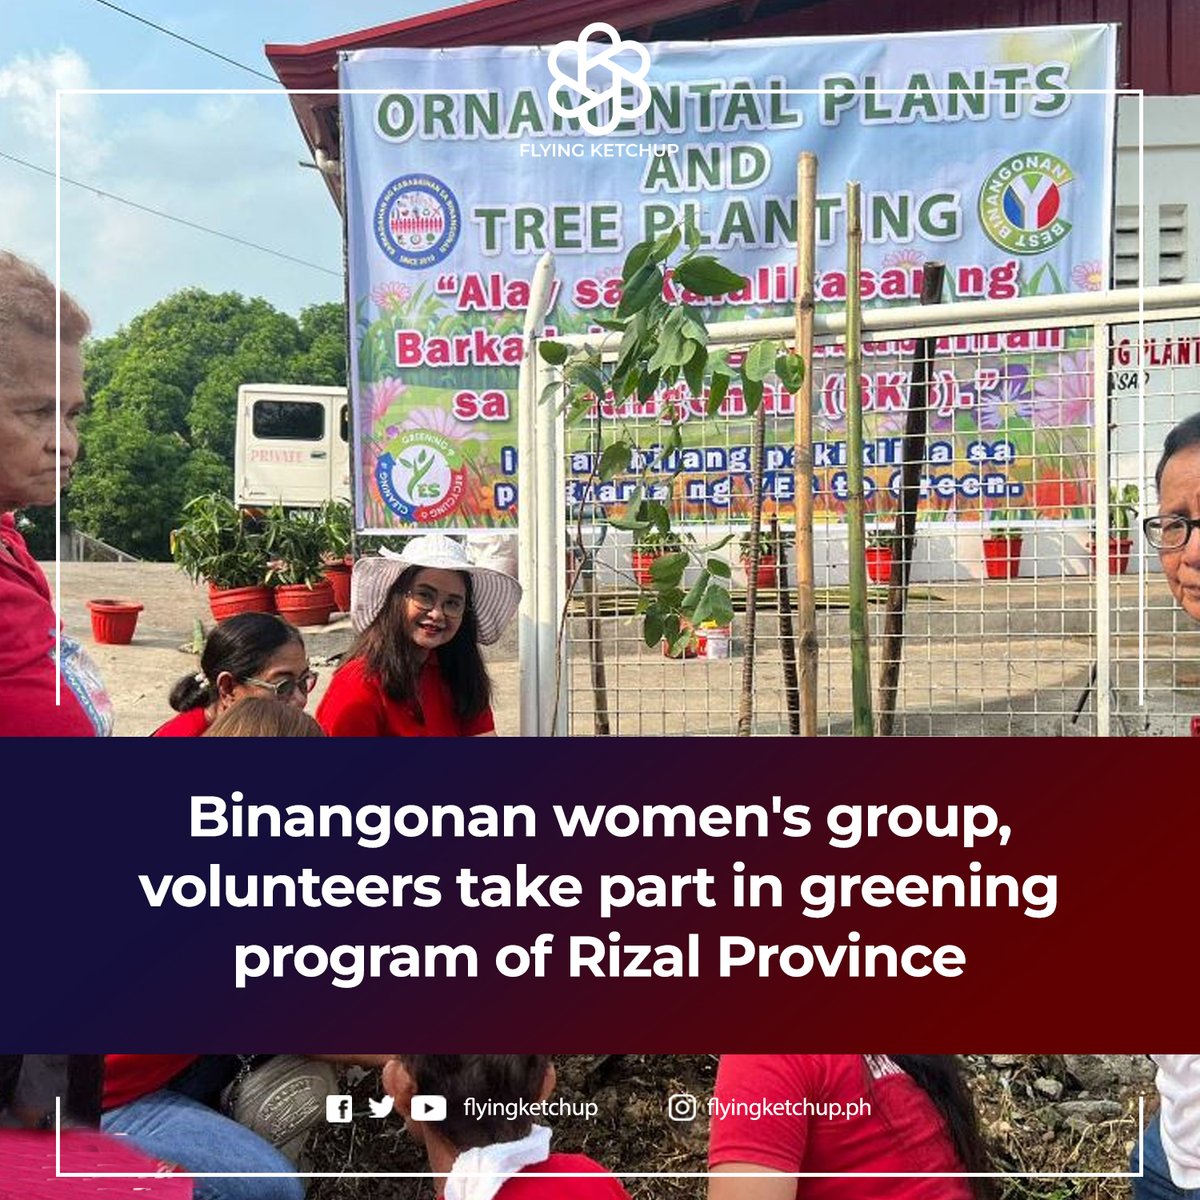 Binangonan women's group, volunteers take part in greening program of Rizal Province!

READ MORE: rb.gy/zq2fz

#FlyingKetchup #GoingGreen